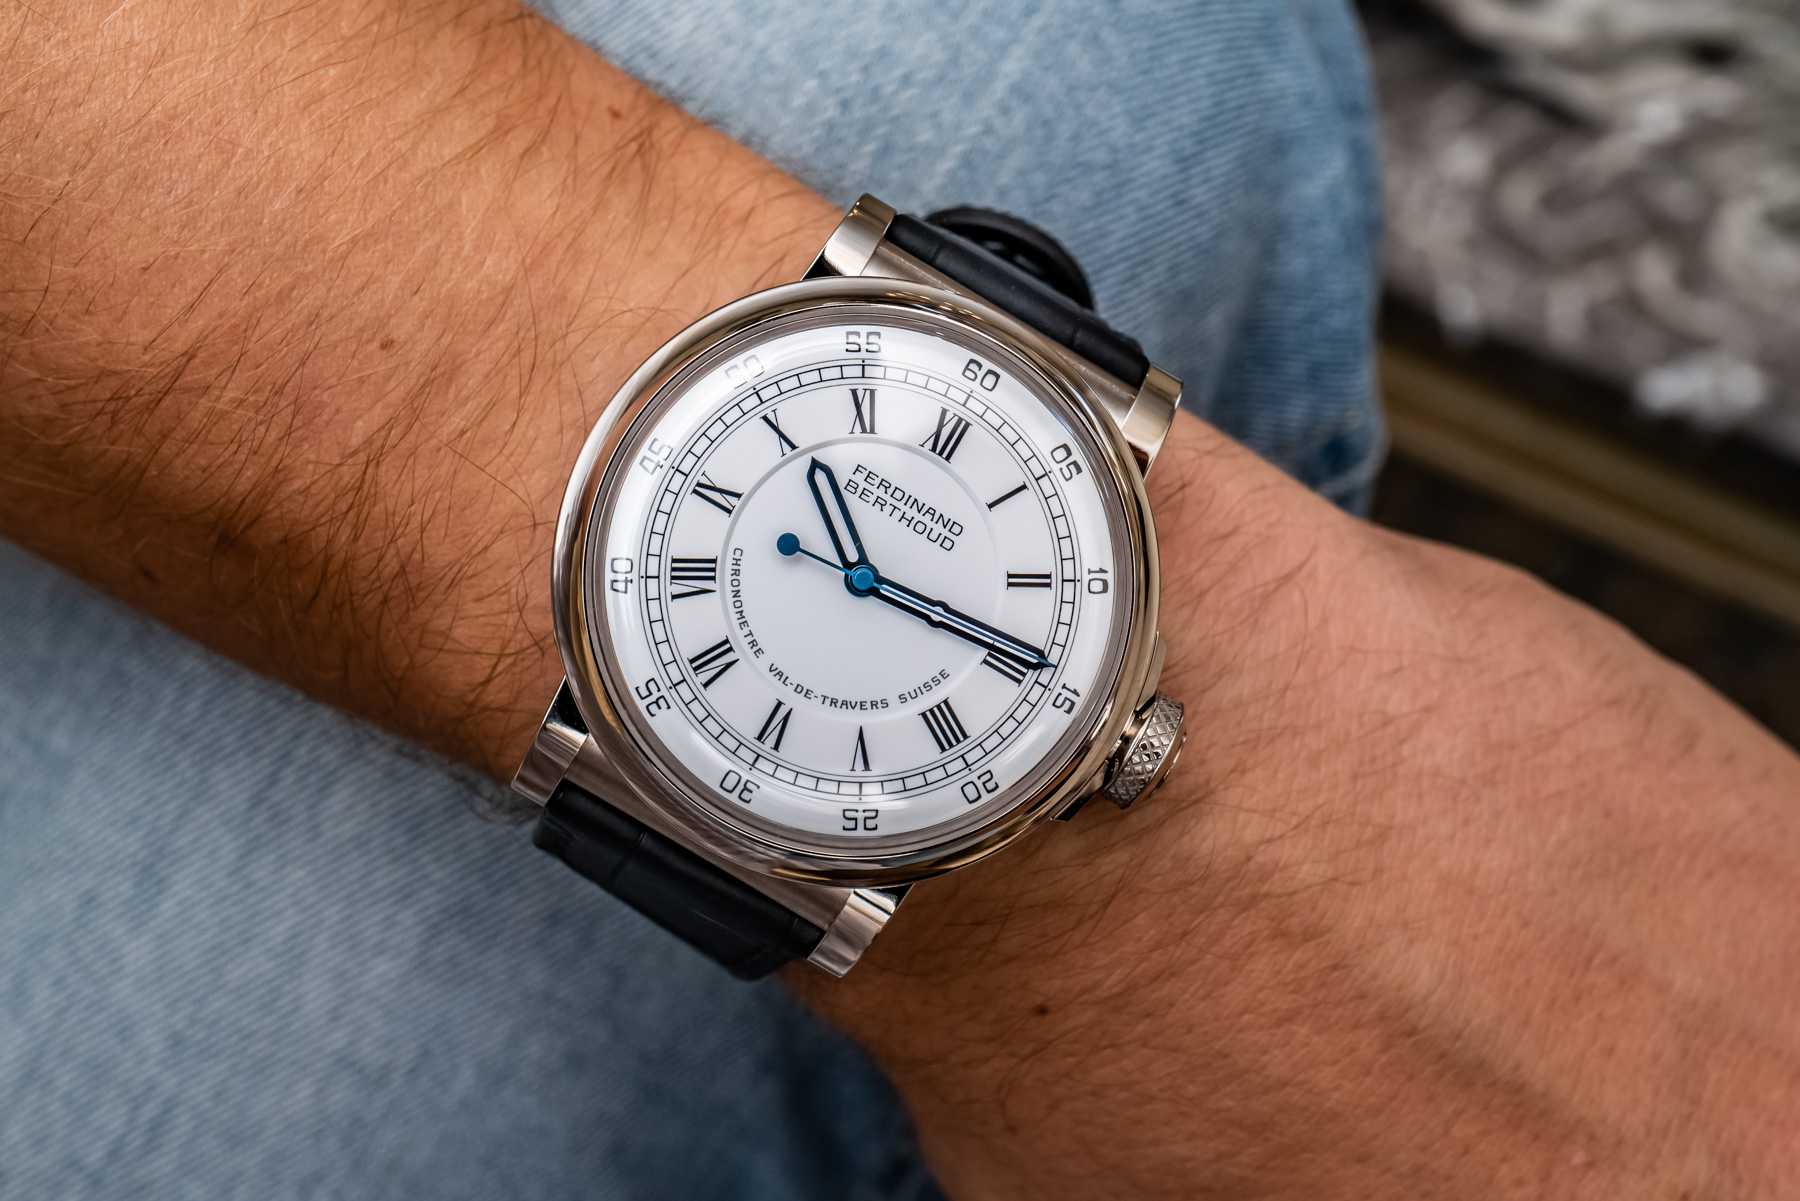 Hands On Ferdinand Berthoud Chronometre Fb 2re Watch Ablogtowatch